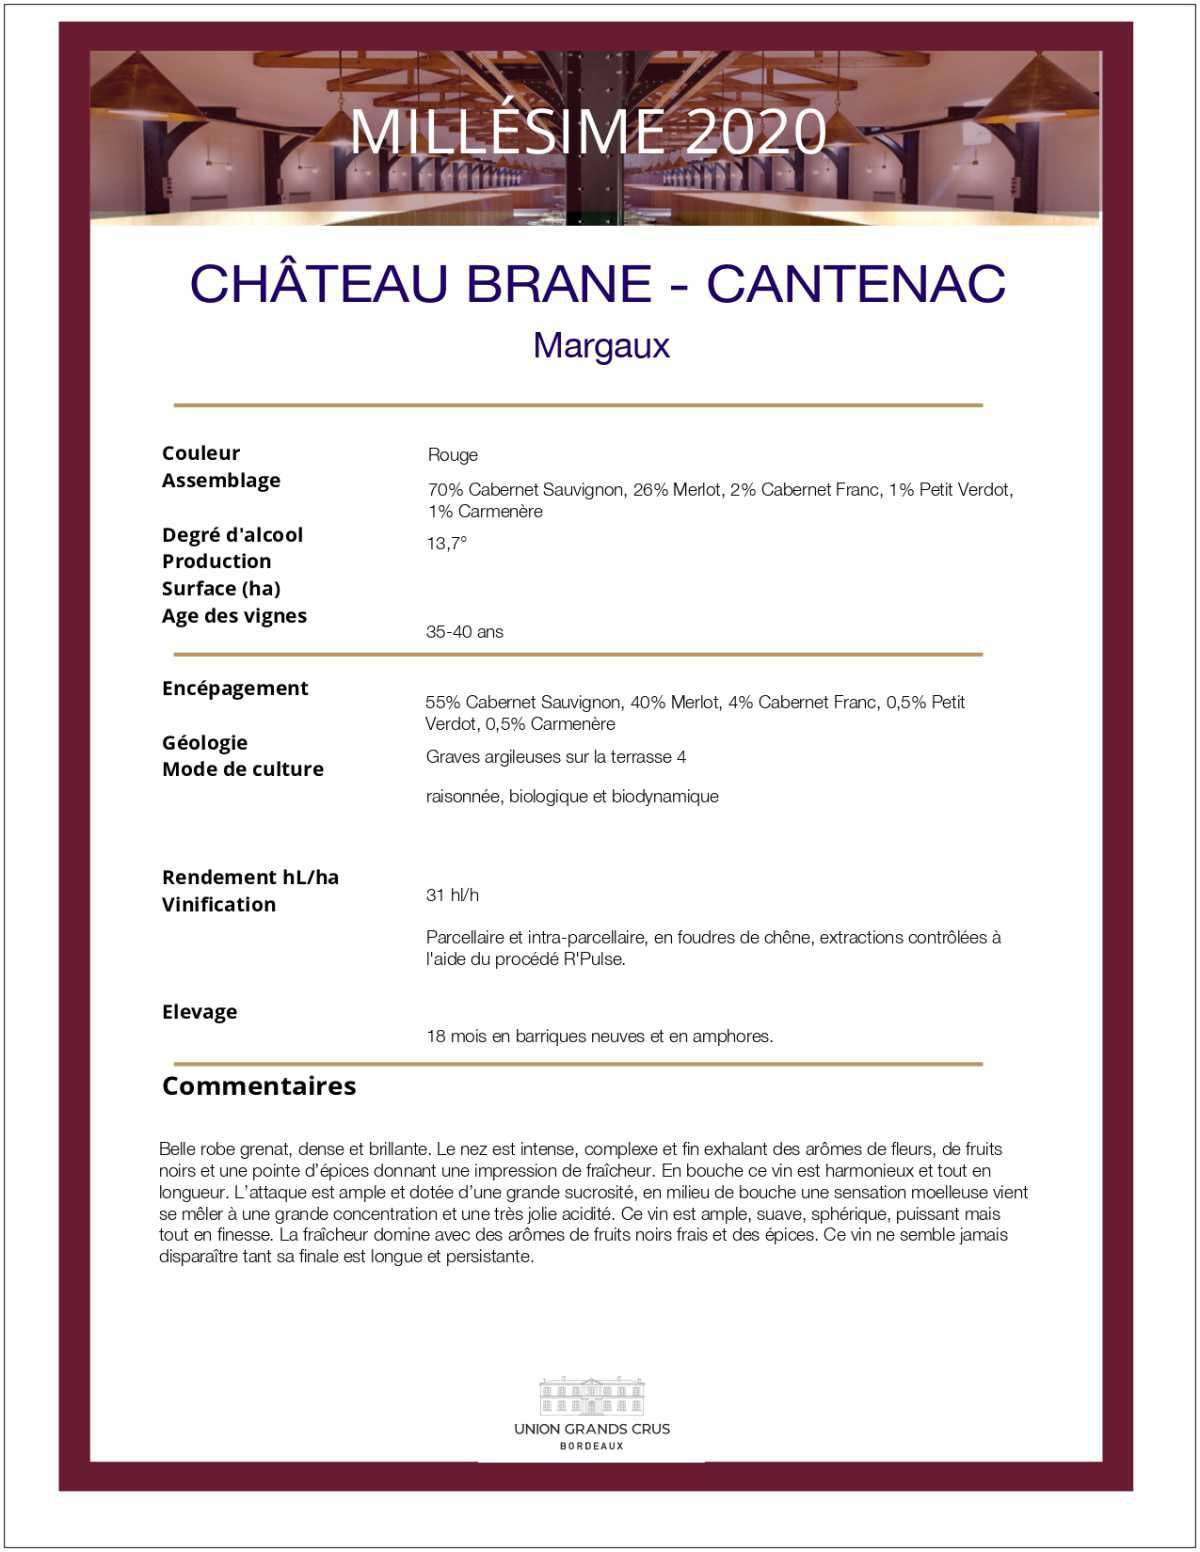 Château Brane - Cantenac